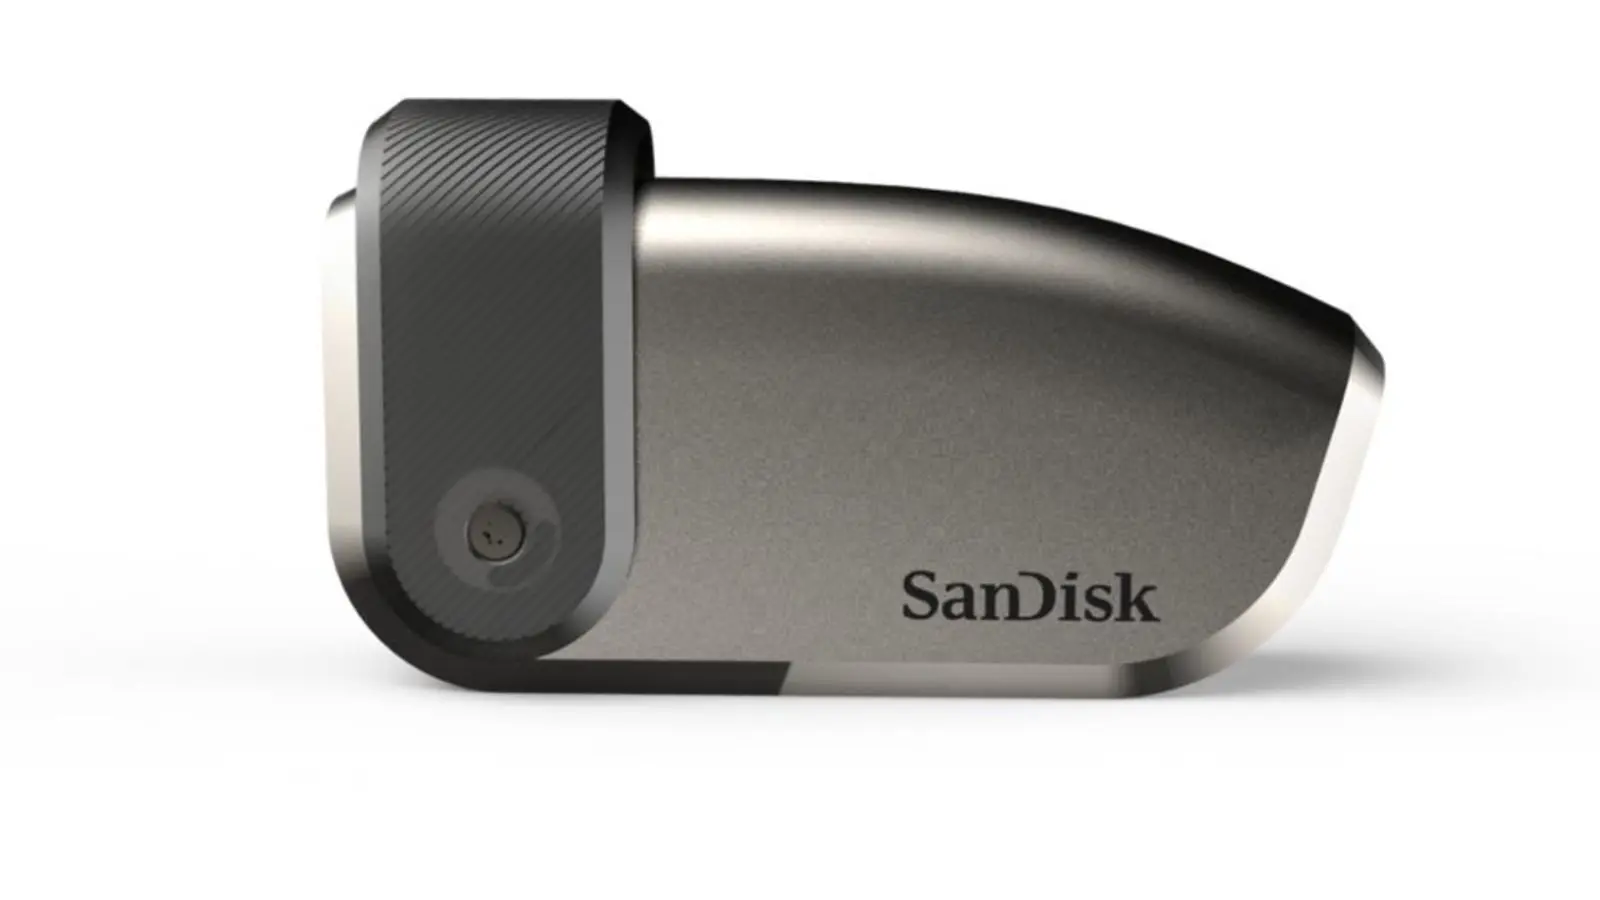 Sandisk presenta la primera USB de 4 Terabytes #CES2019